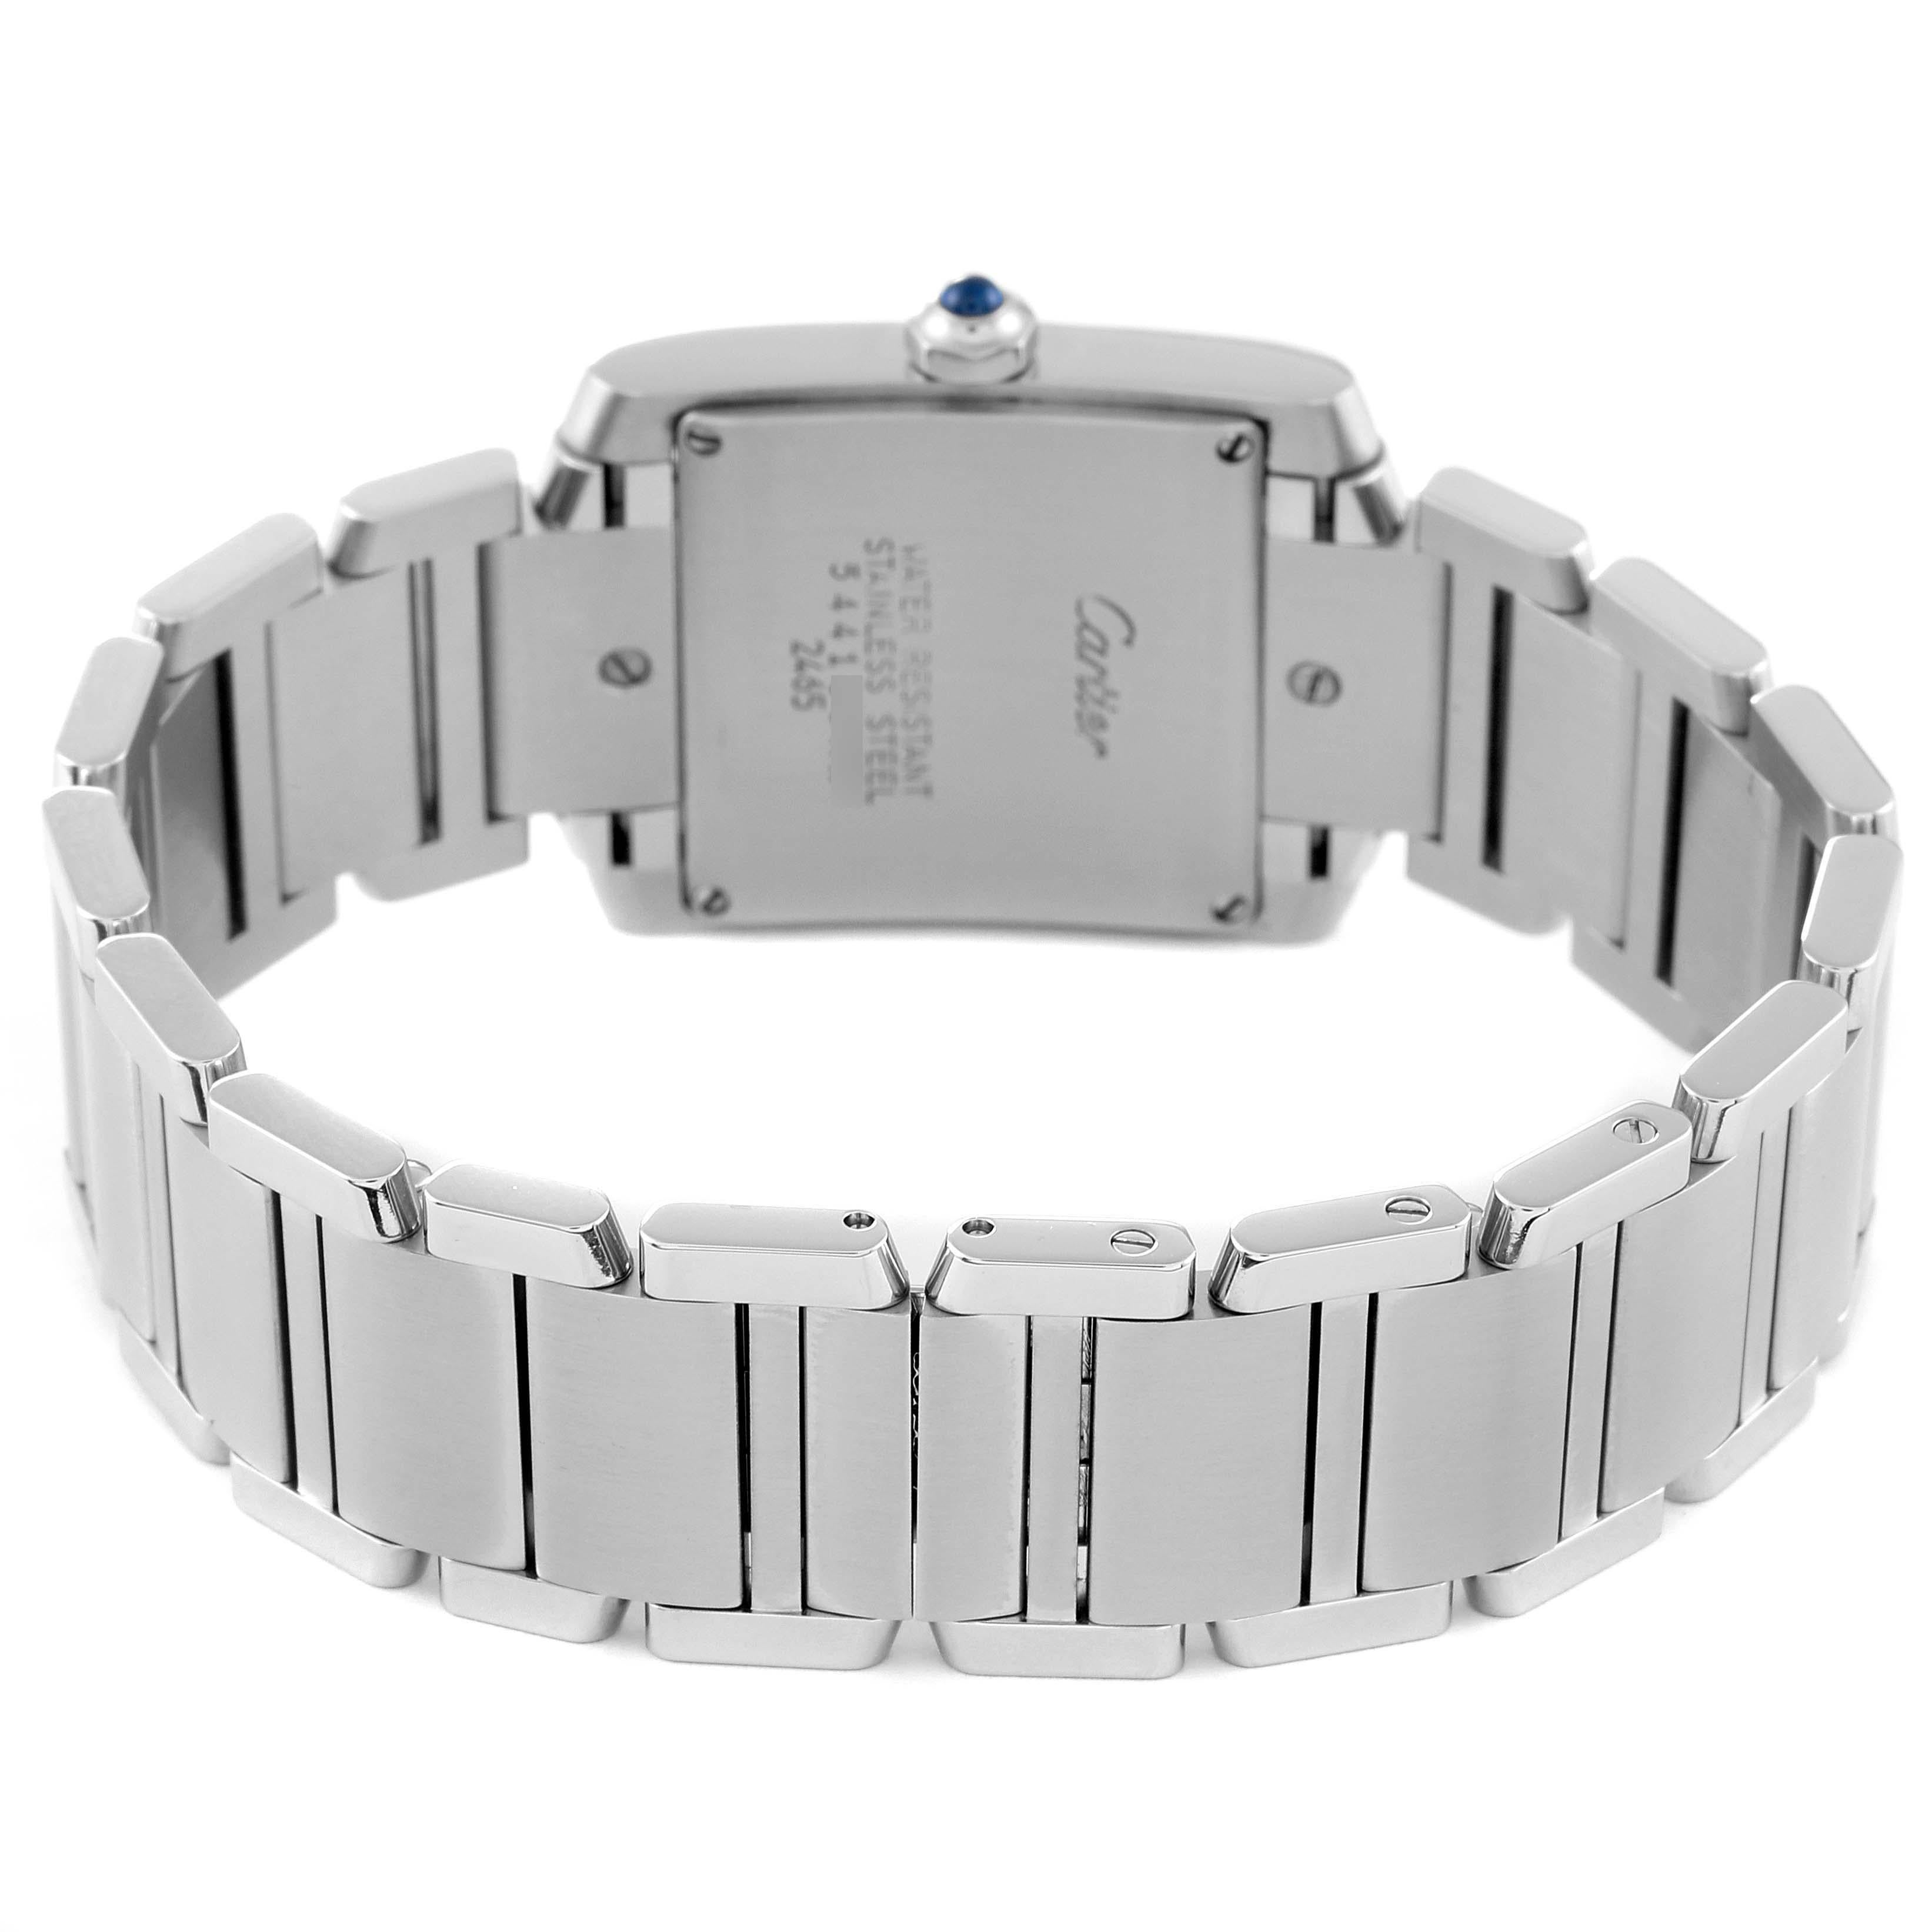 Cartier Tank Francaise Midsize Silver Dial Steel Ladies Watch W51011Q3 3